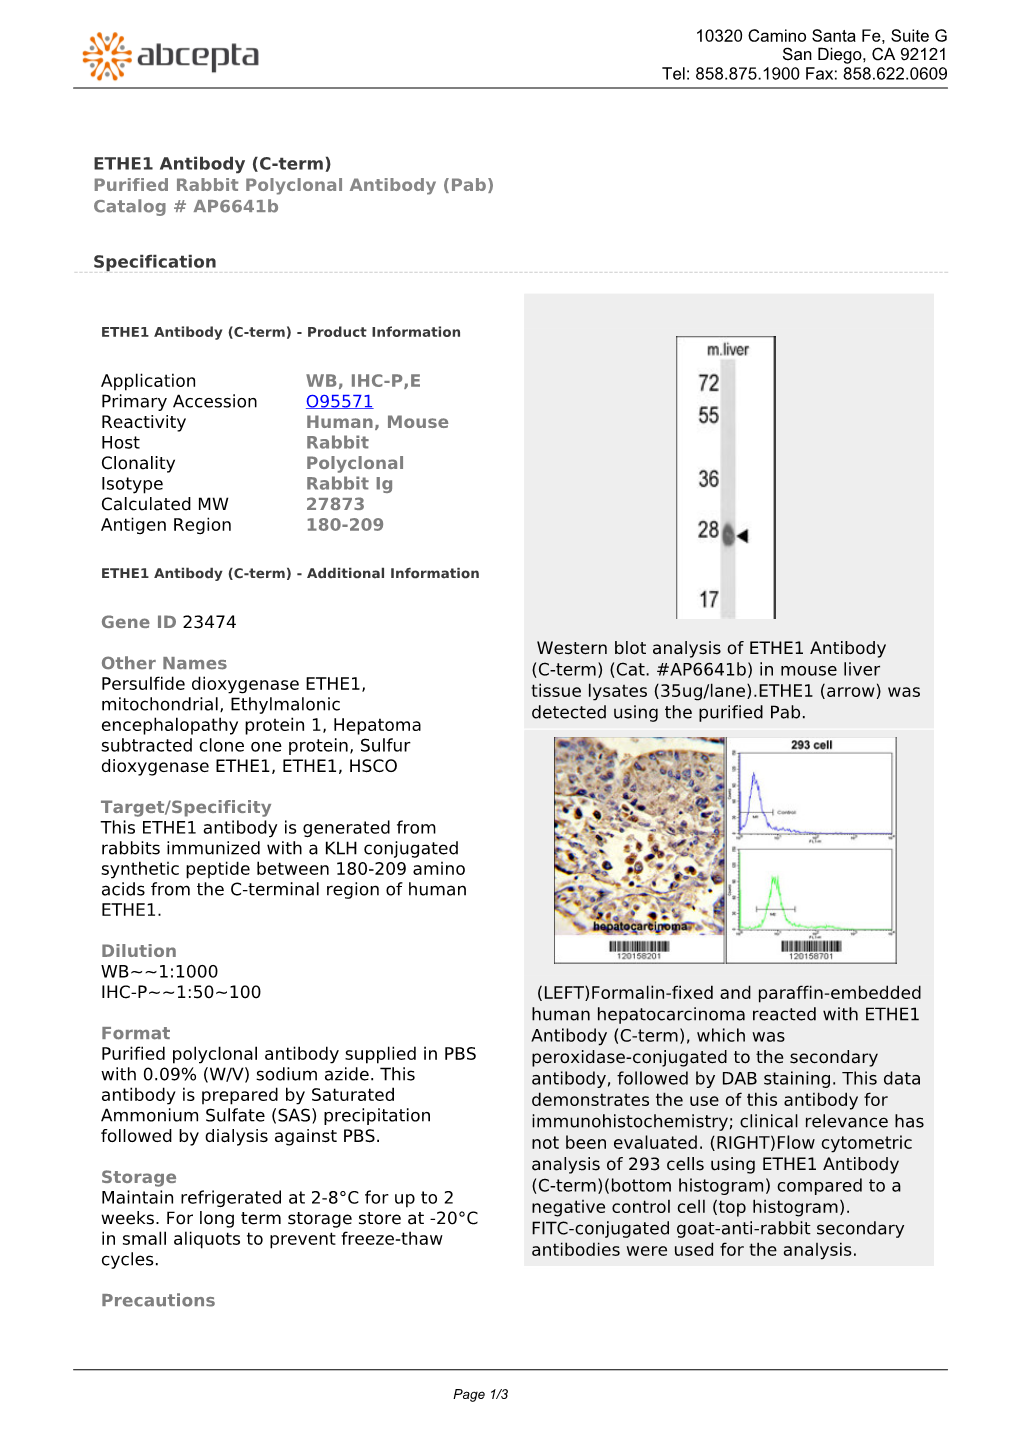 ETHE1 Antibody (C-Term) Purified Rabbit Polyclonal Antibody (Pab) Catalog # Ap6641b